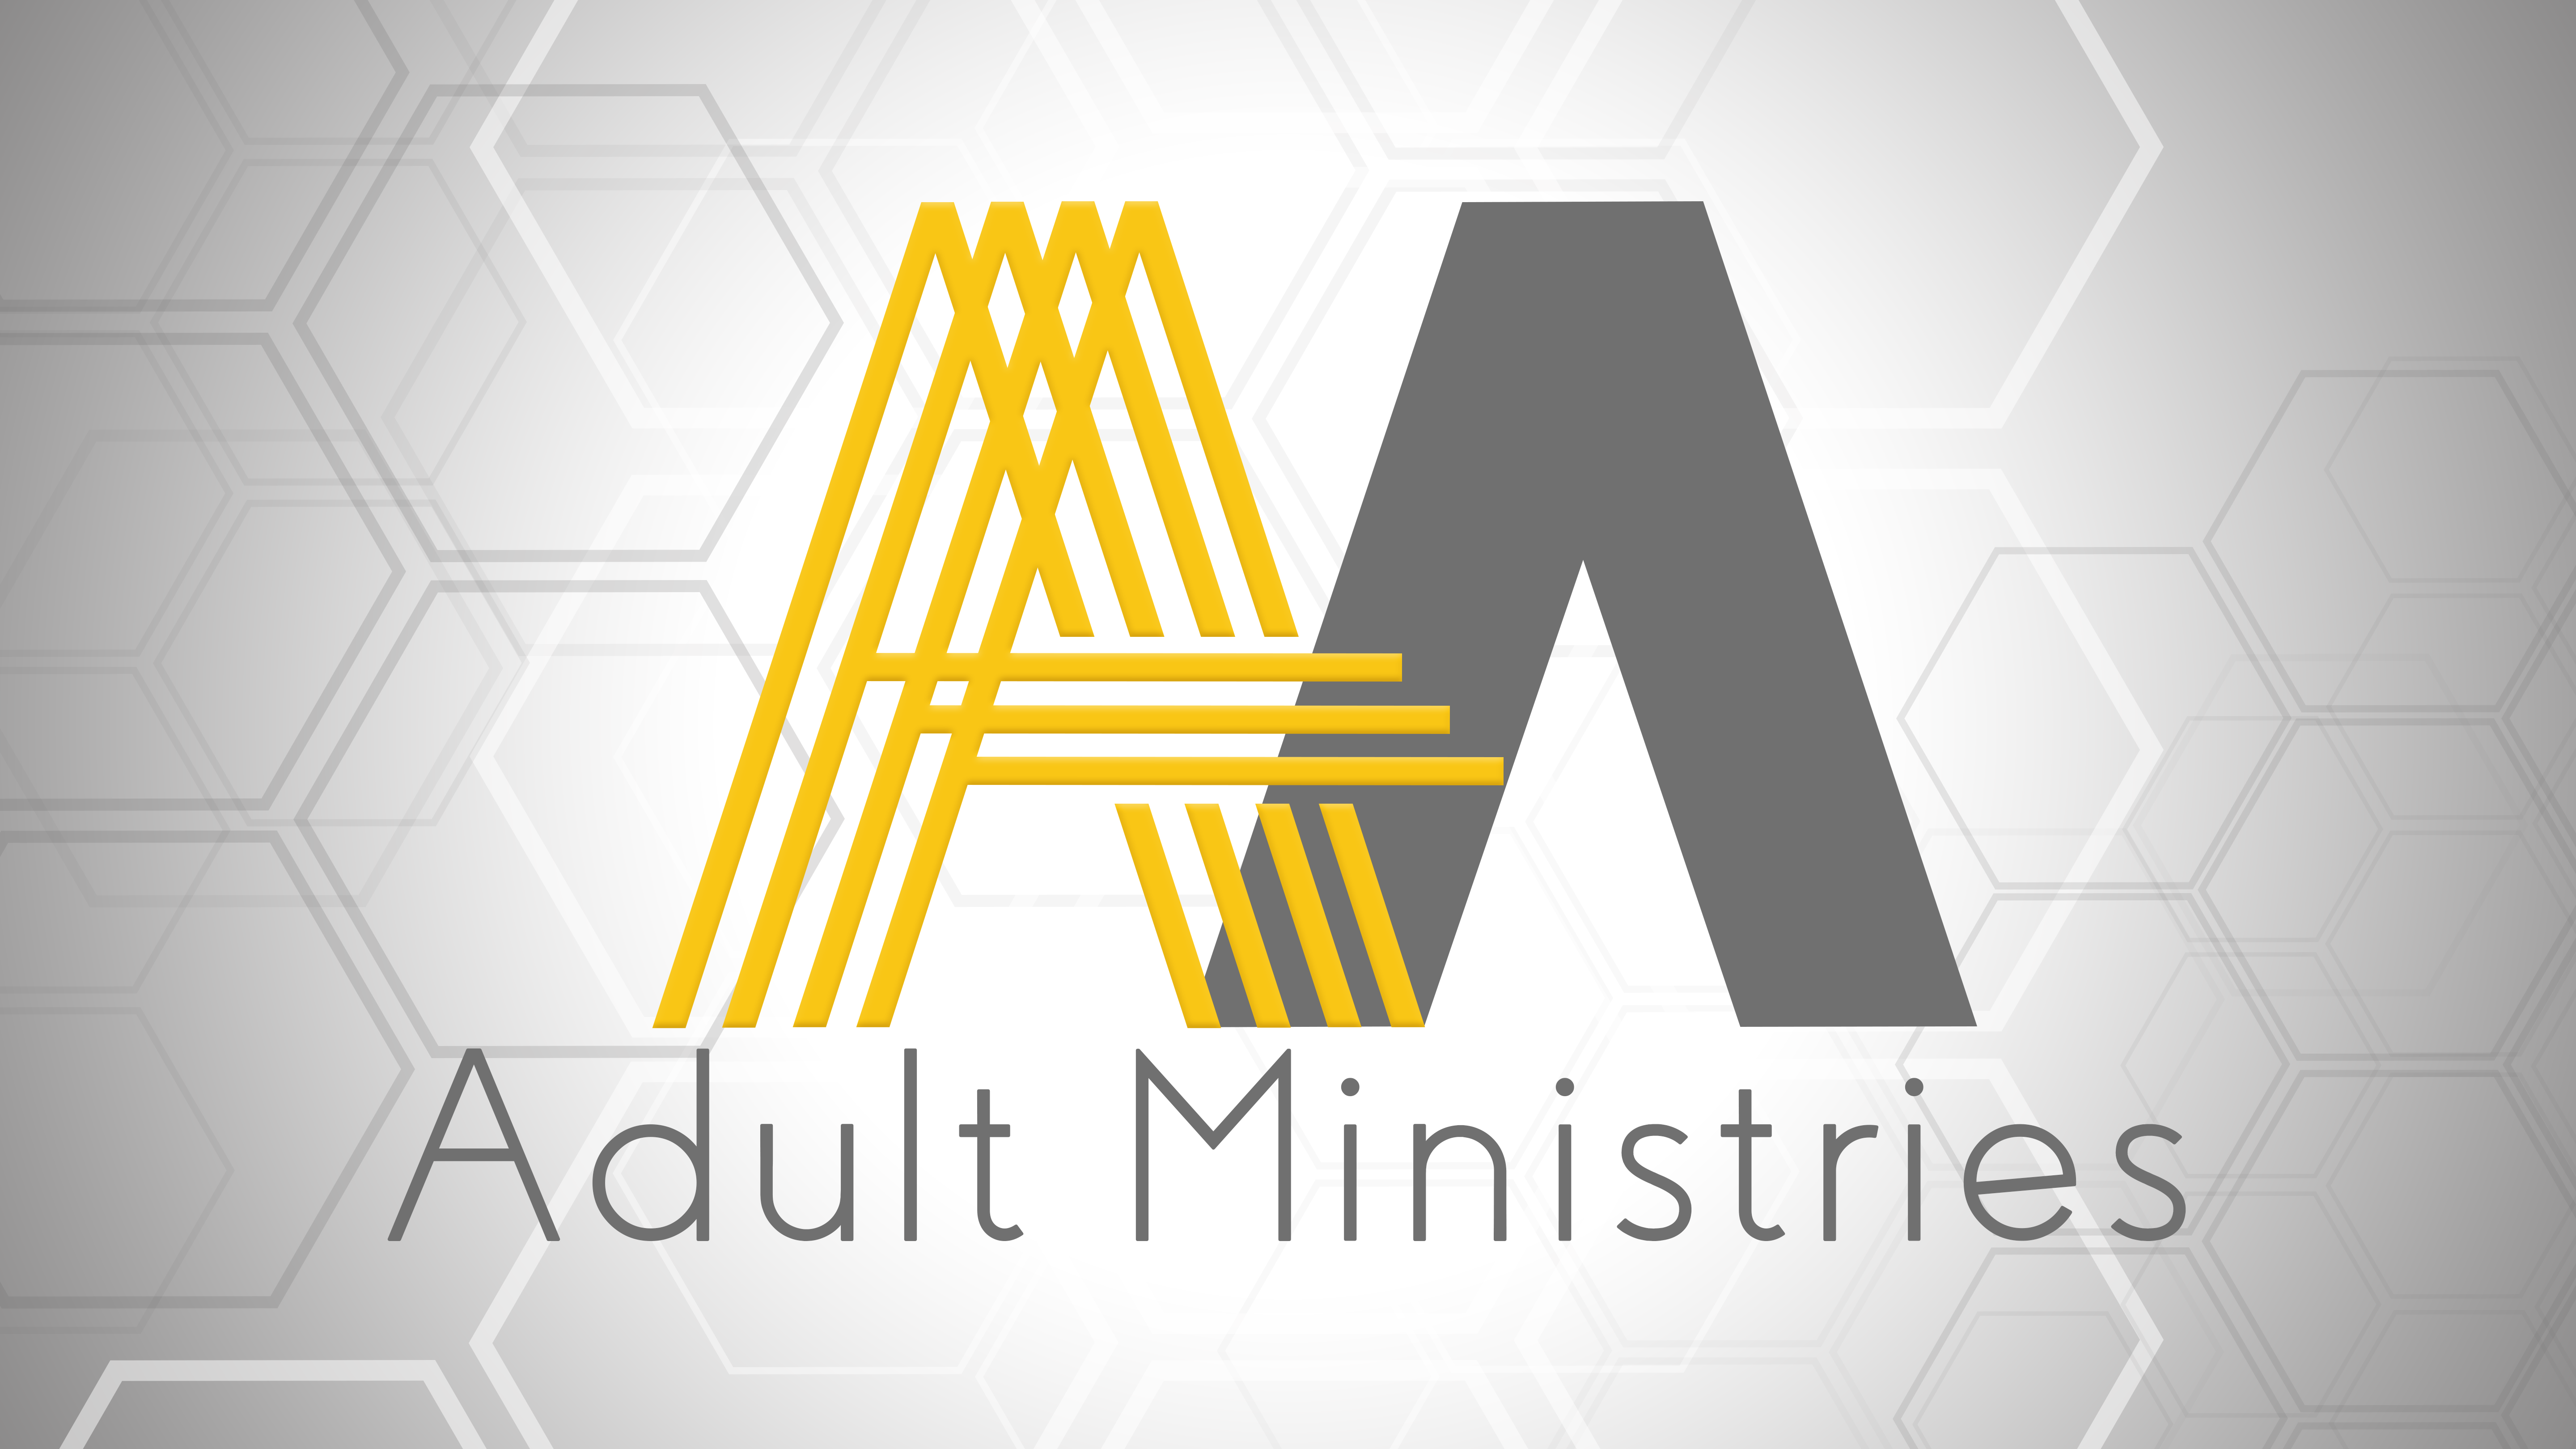 Adult Ministries V2 copy